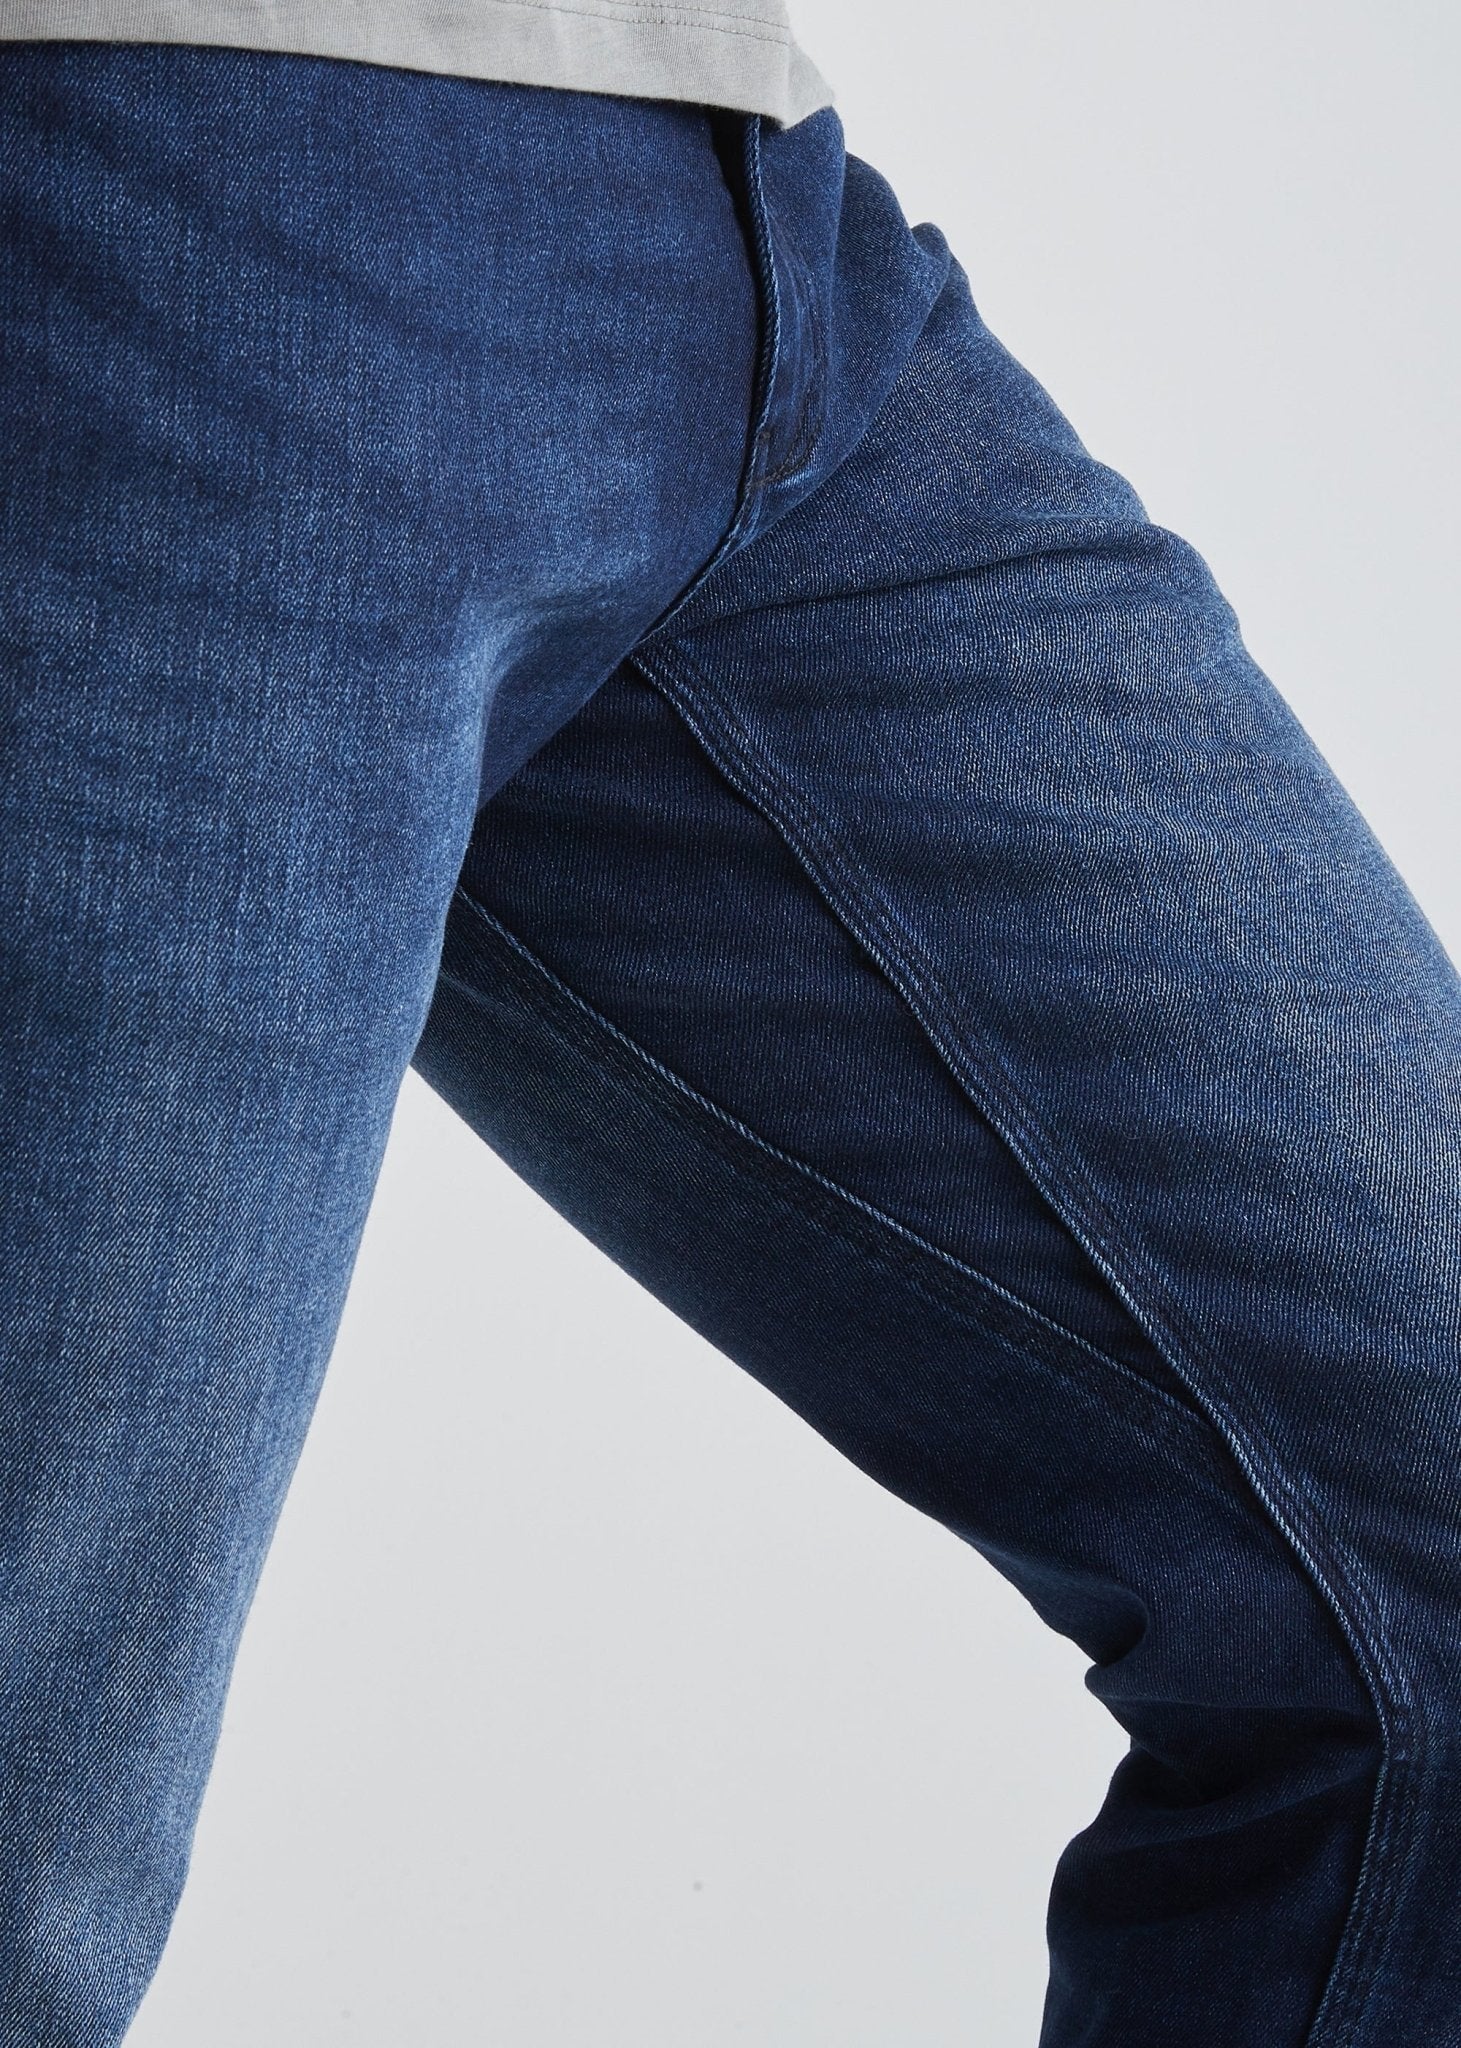 Jeans Fit Slim Resistant Water Men\'s Stretch